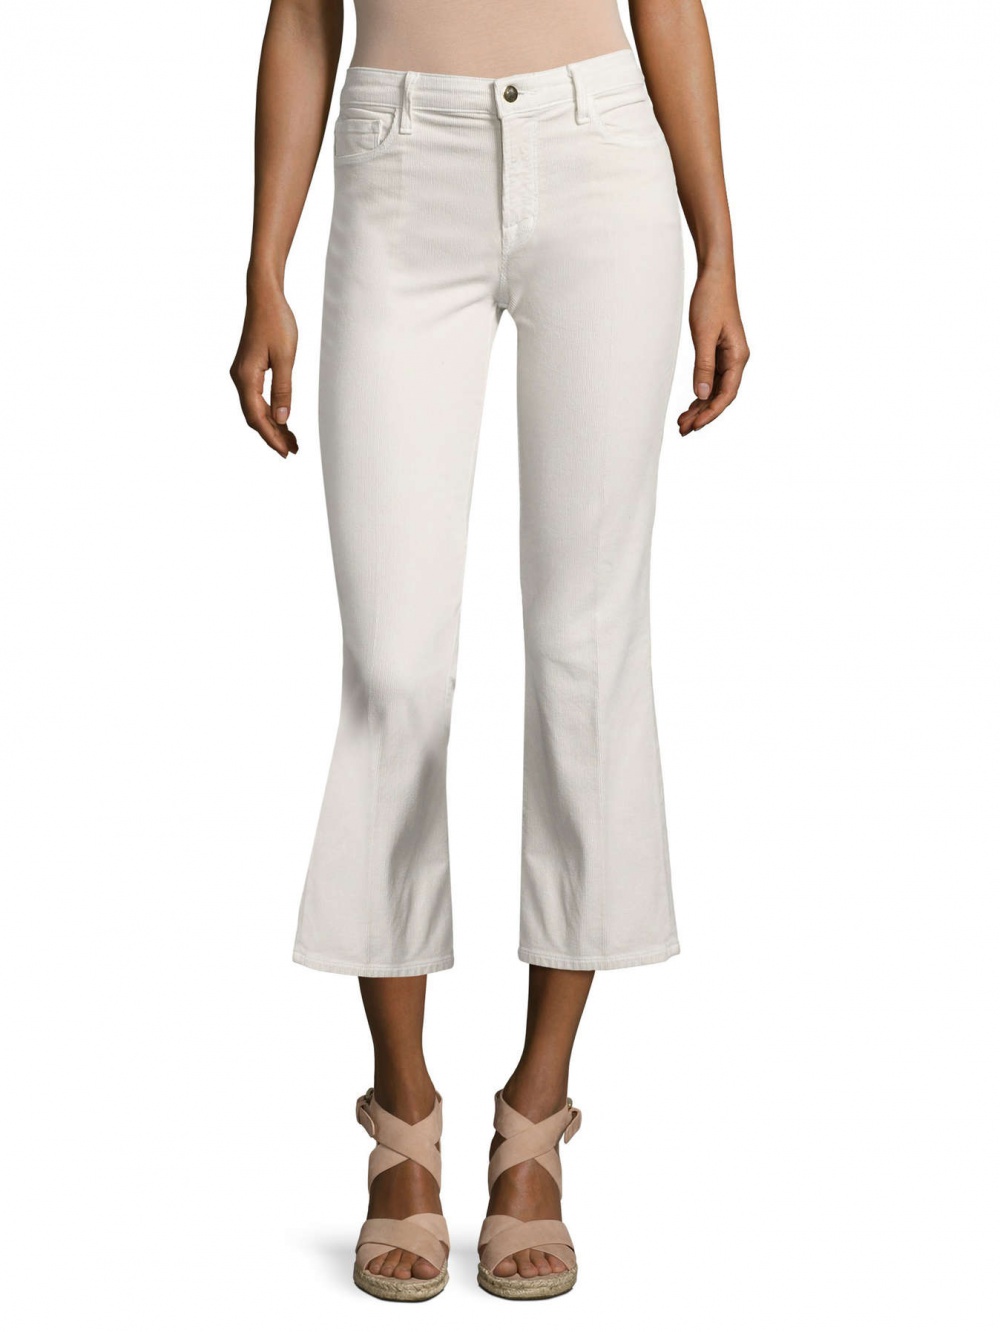 Укороченные светлые вельветовые джинсы J Brand Selena Mid Rise Jeans. Размер 29.